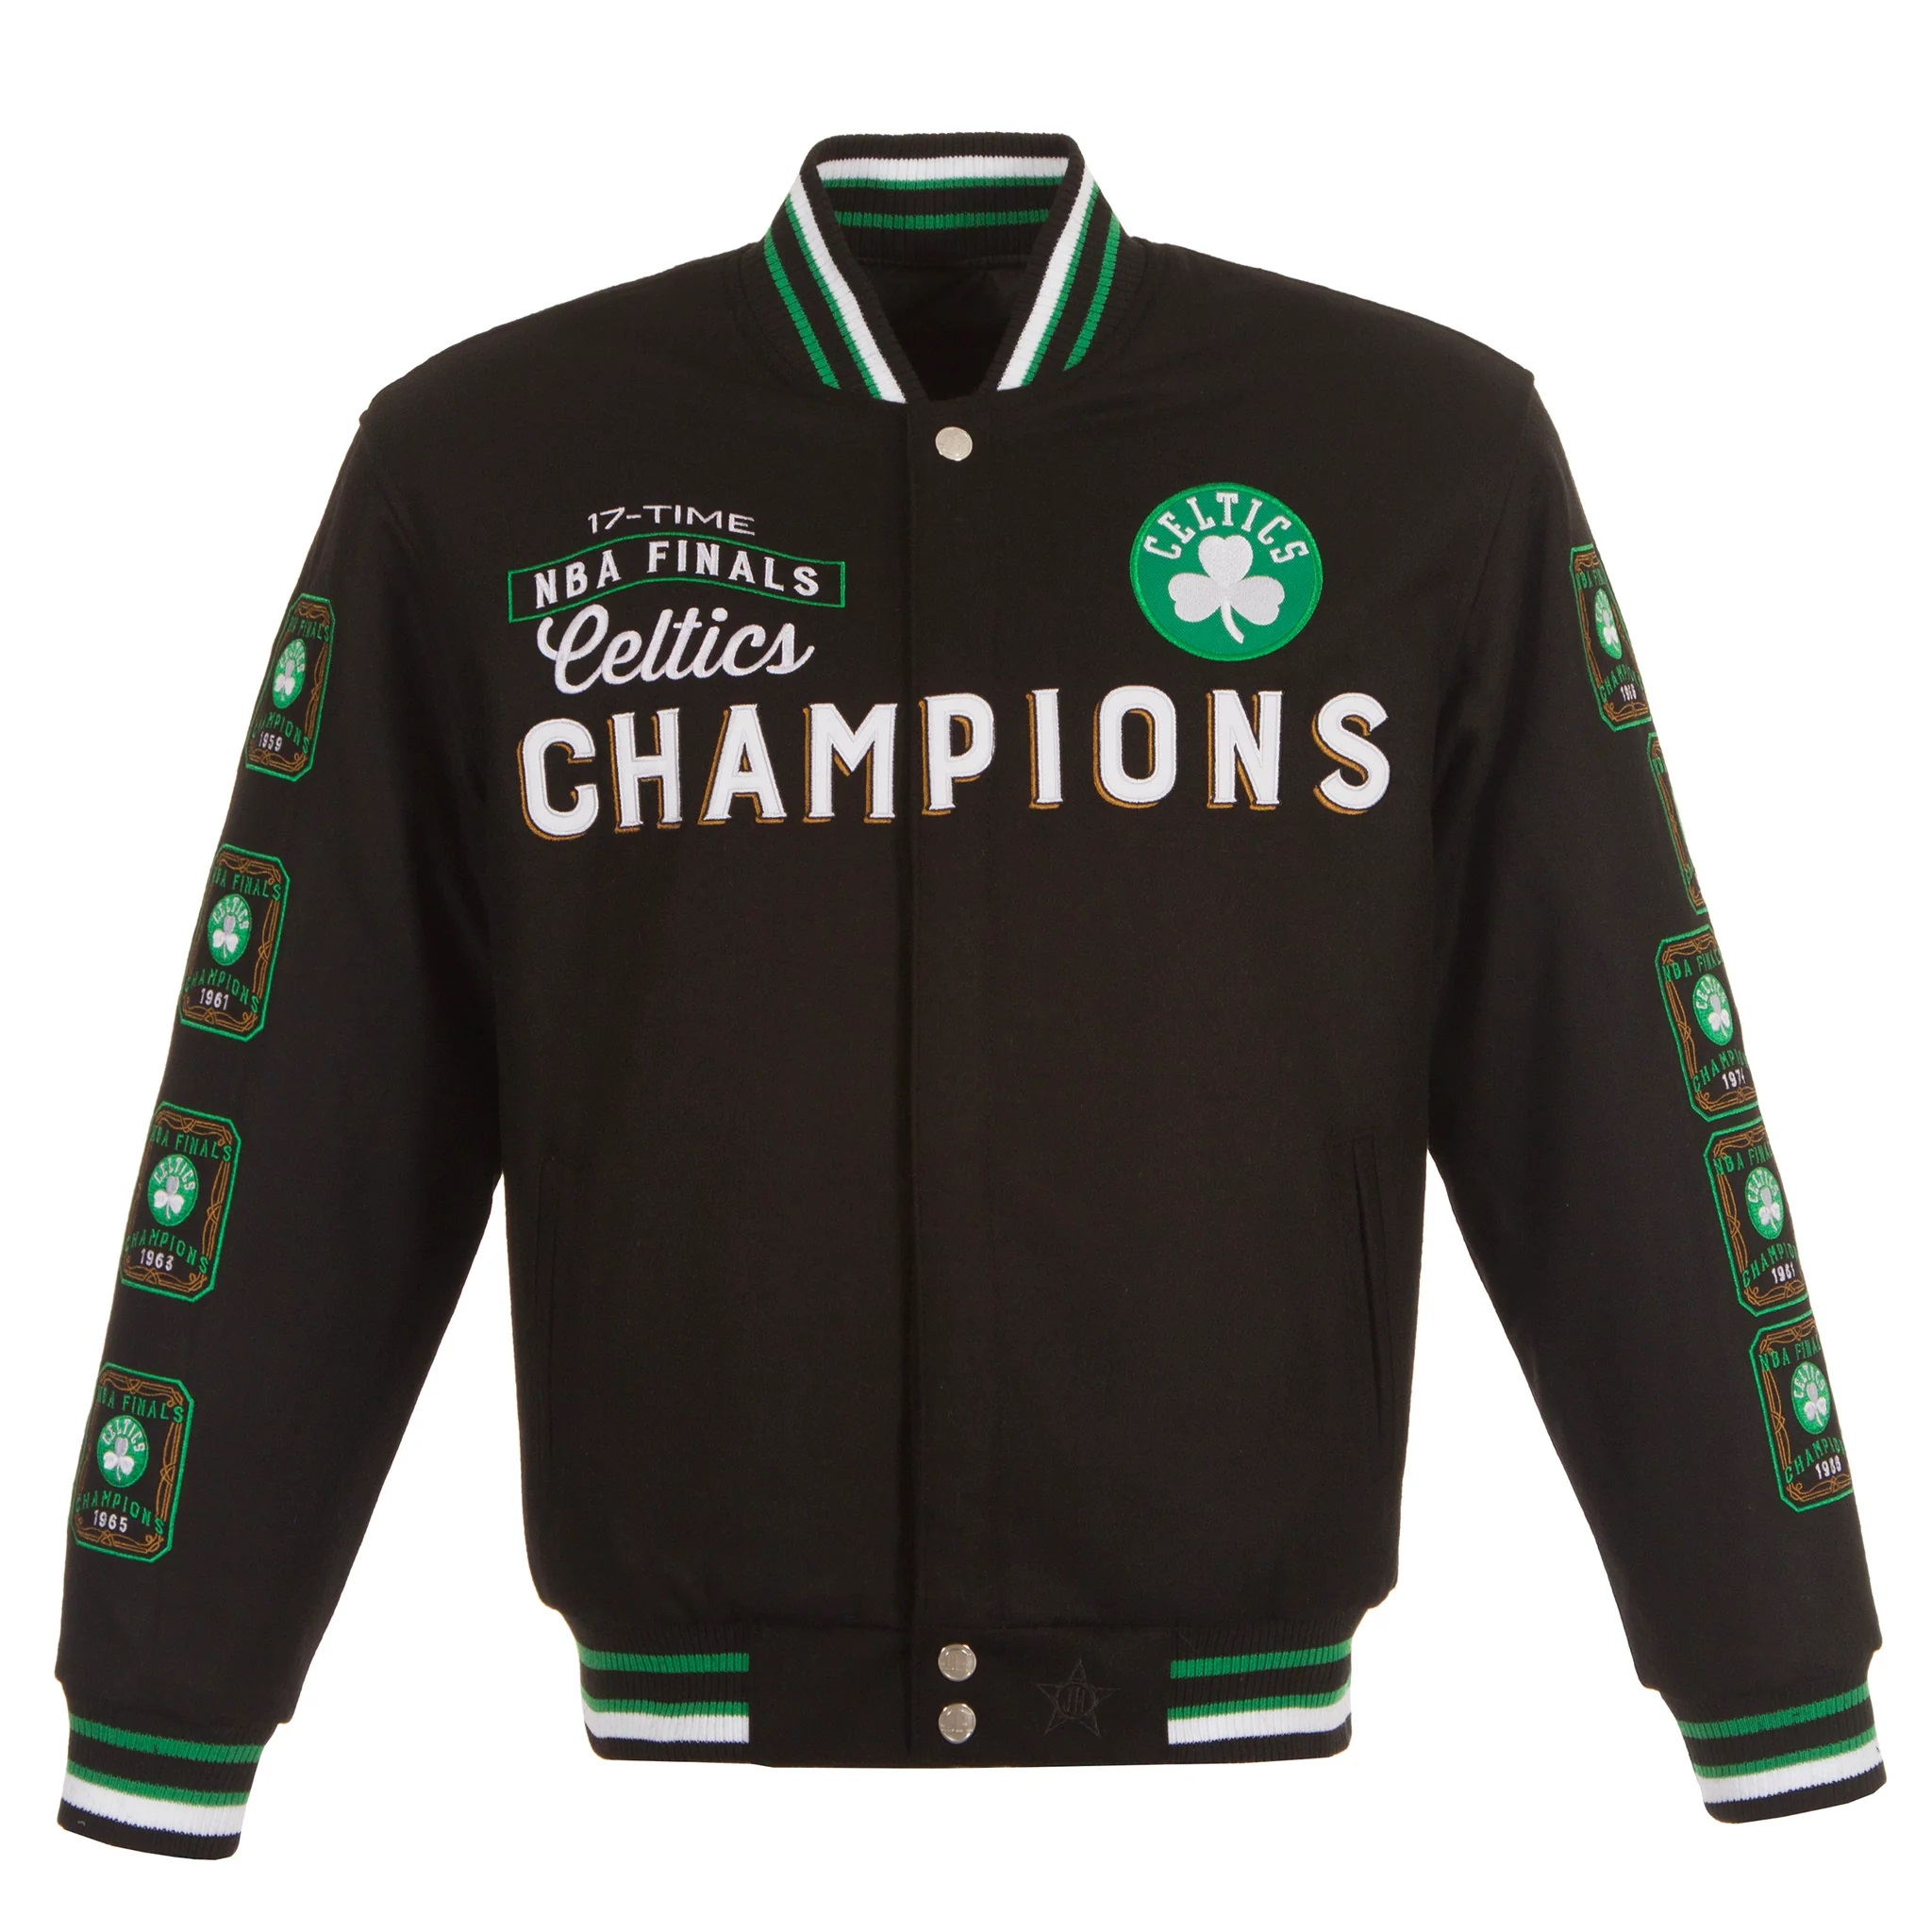 Boston Celtics 17-Time NBA Finals Champions Jacket